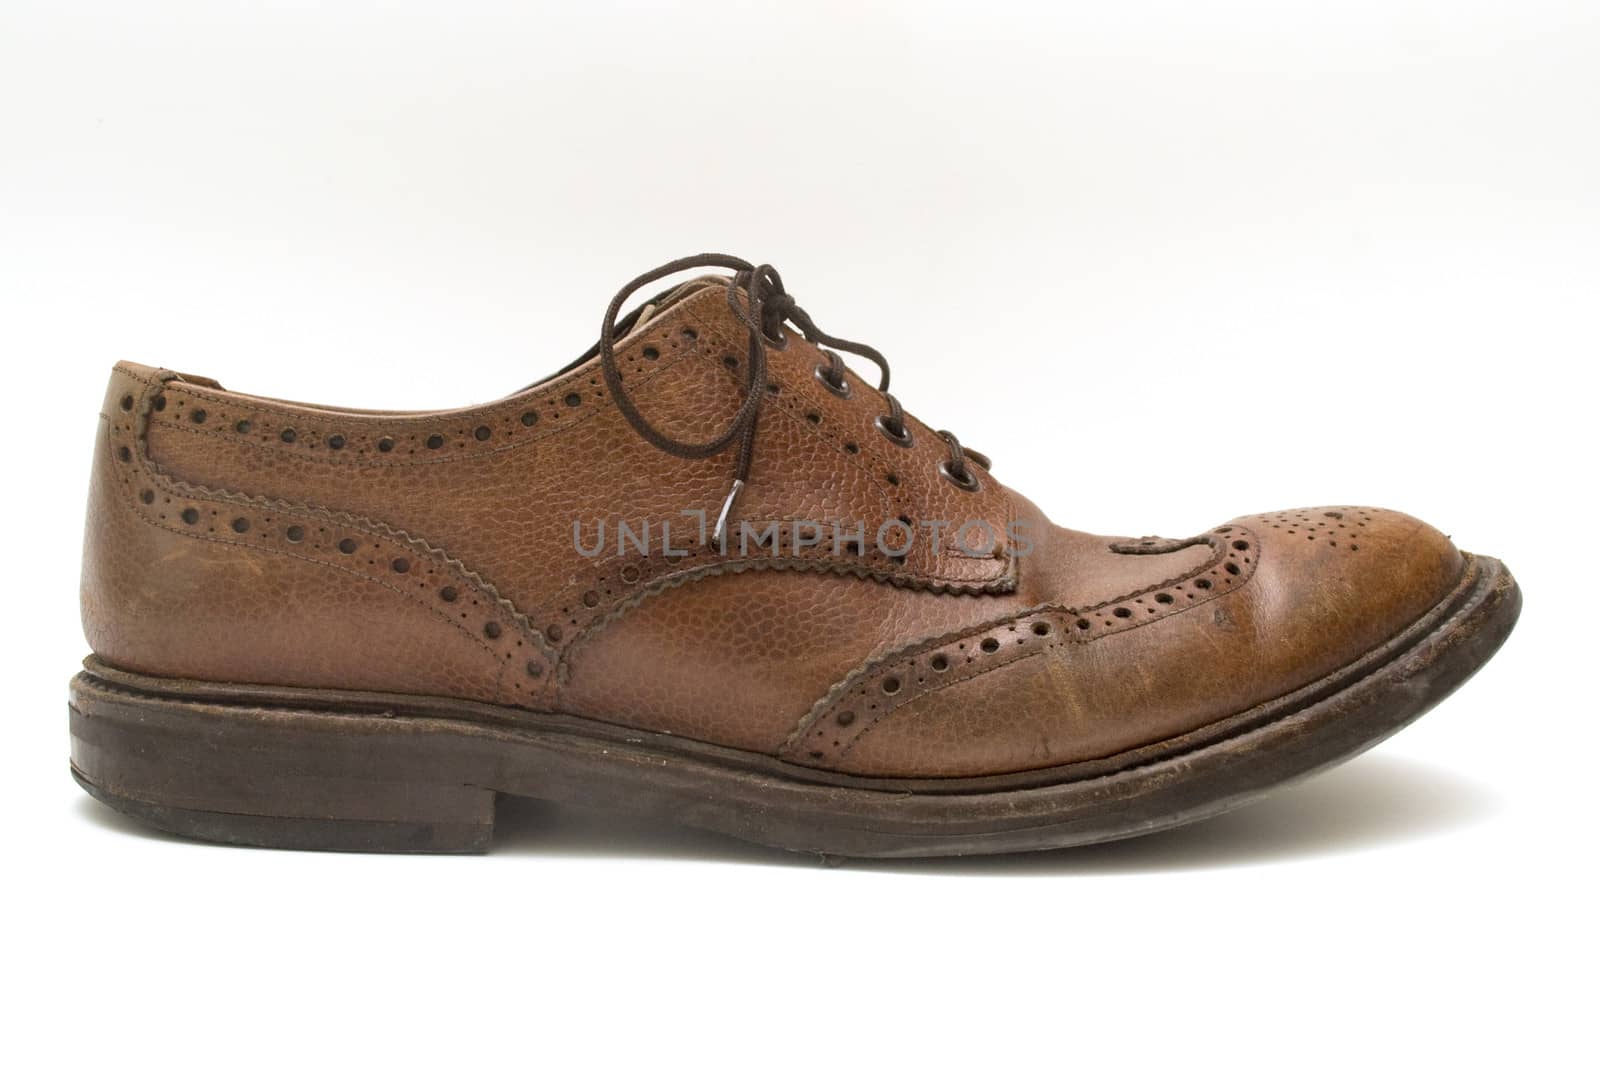 Detail image of a man brown shoe